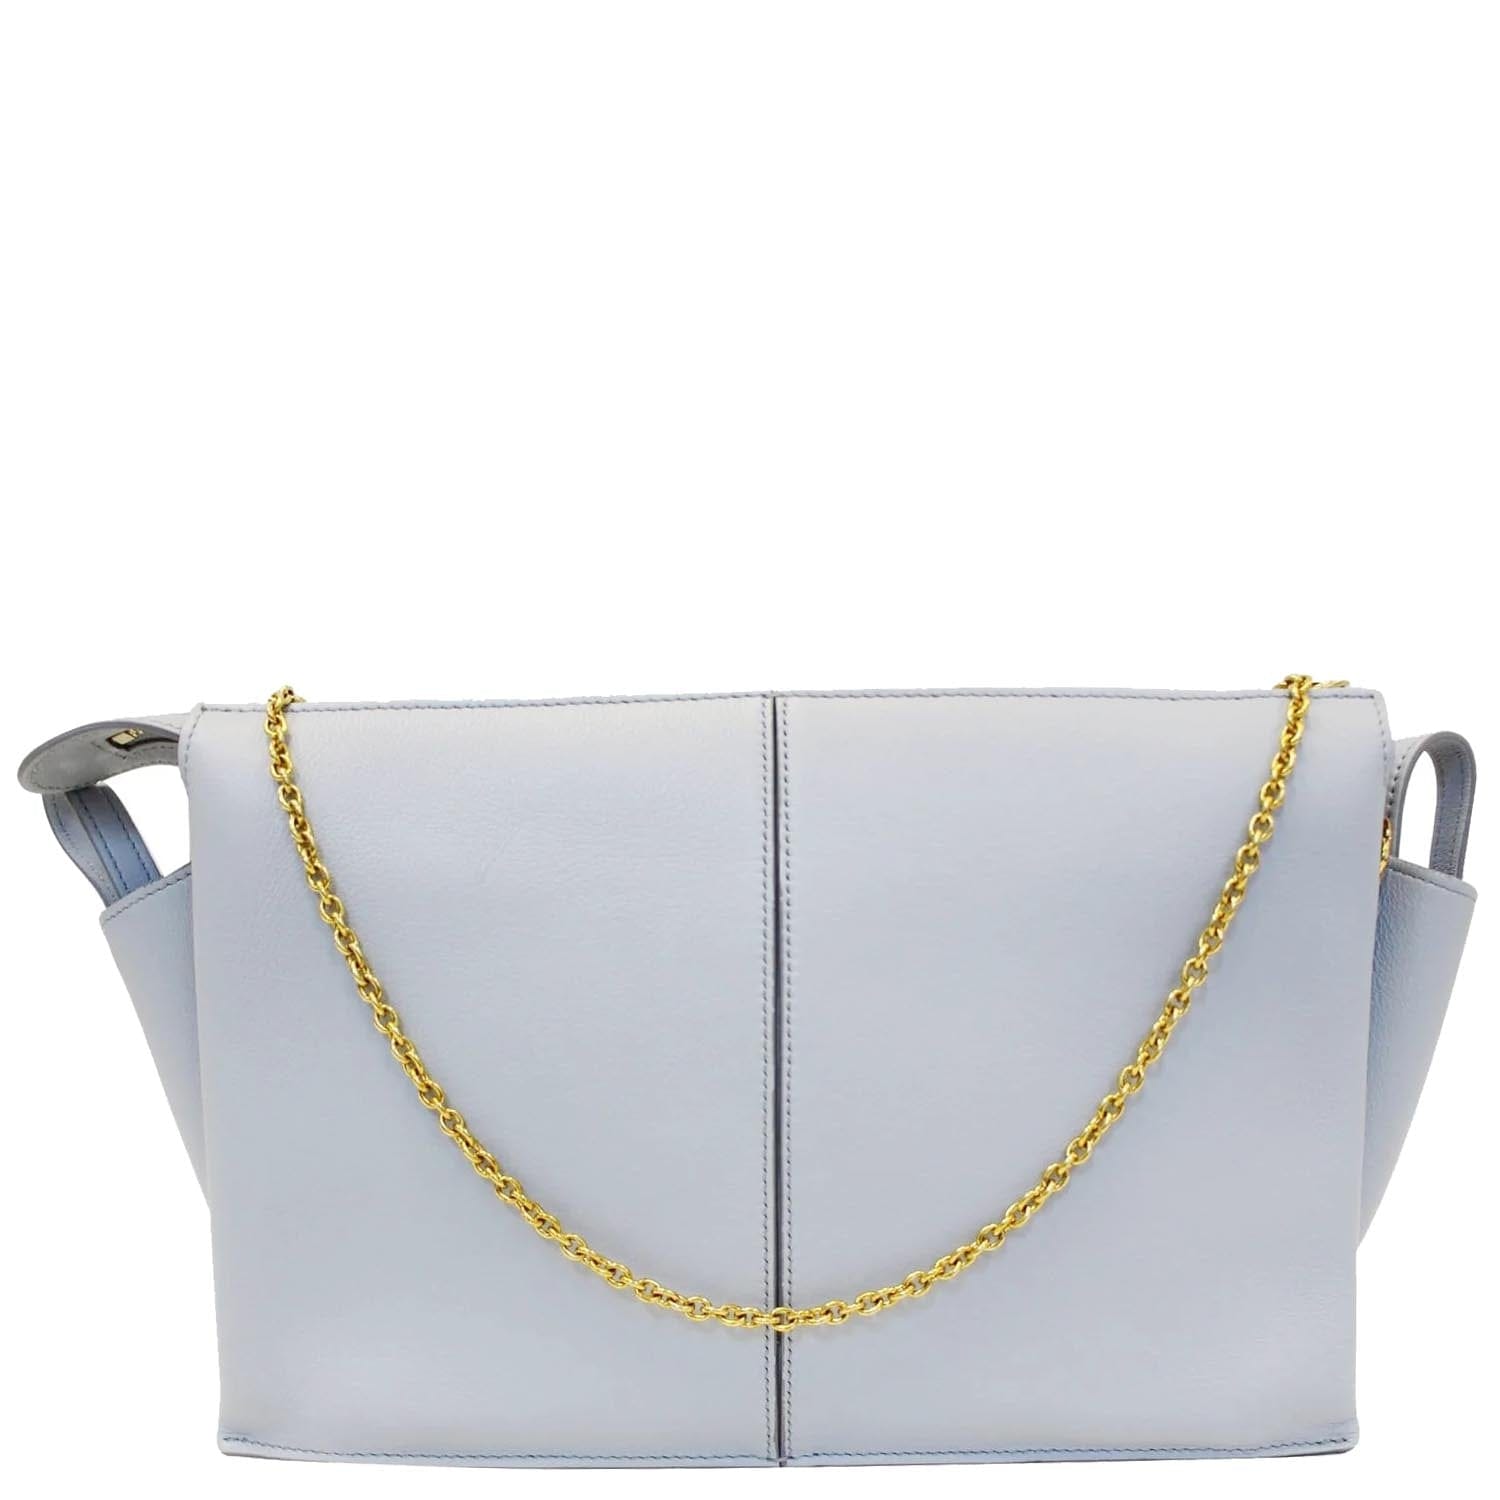 Celine Crossbody Bag - Celine Tri-Fold Clutch on Chain